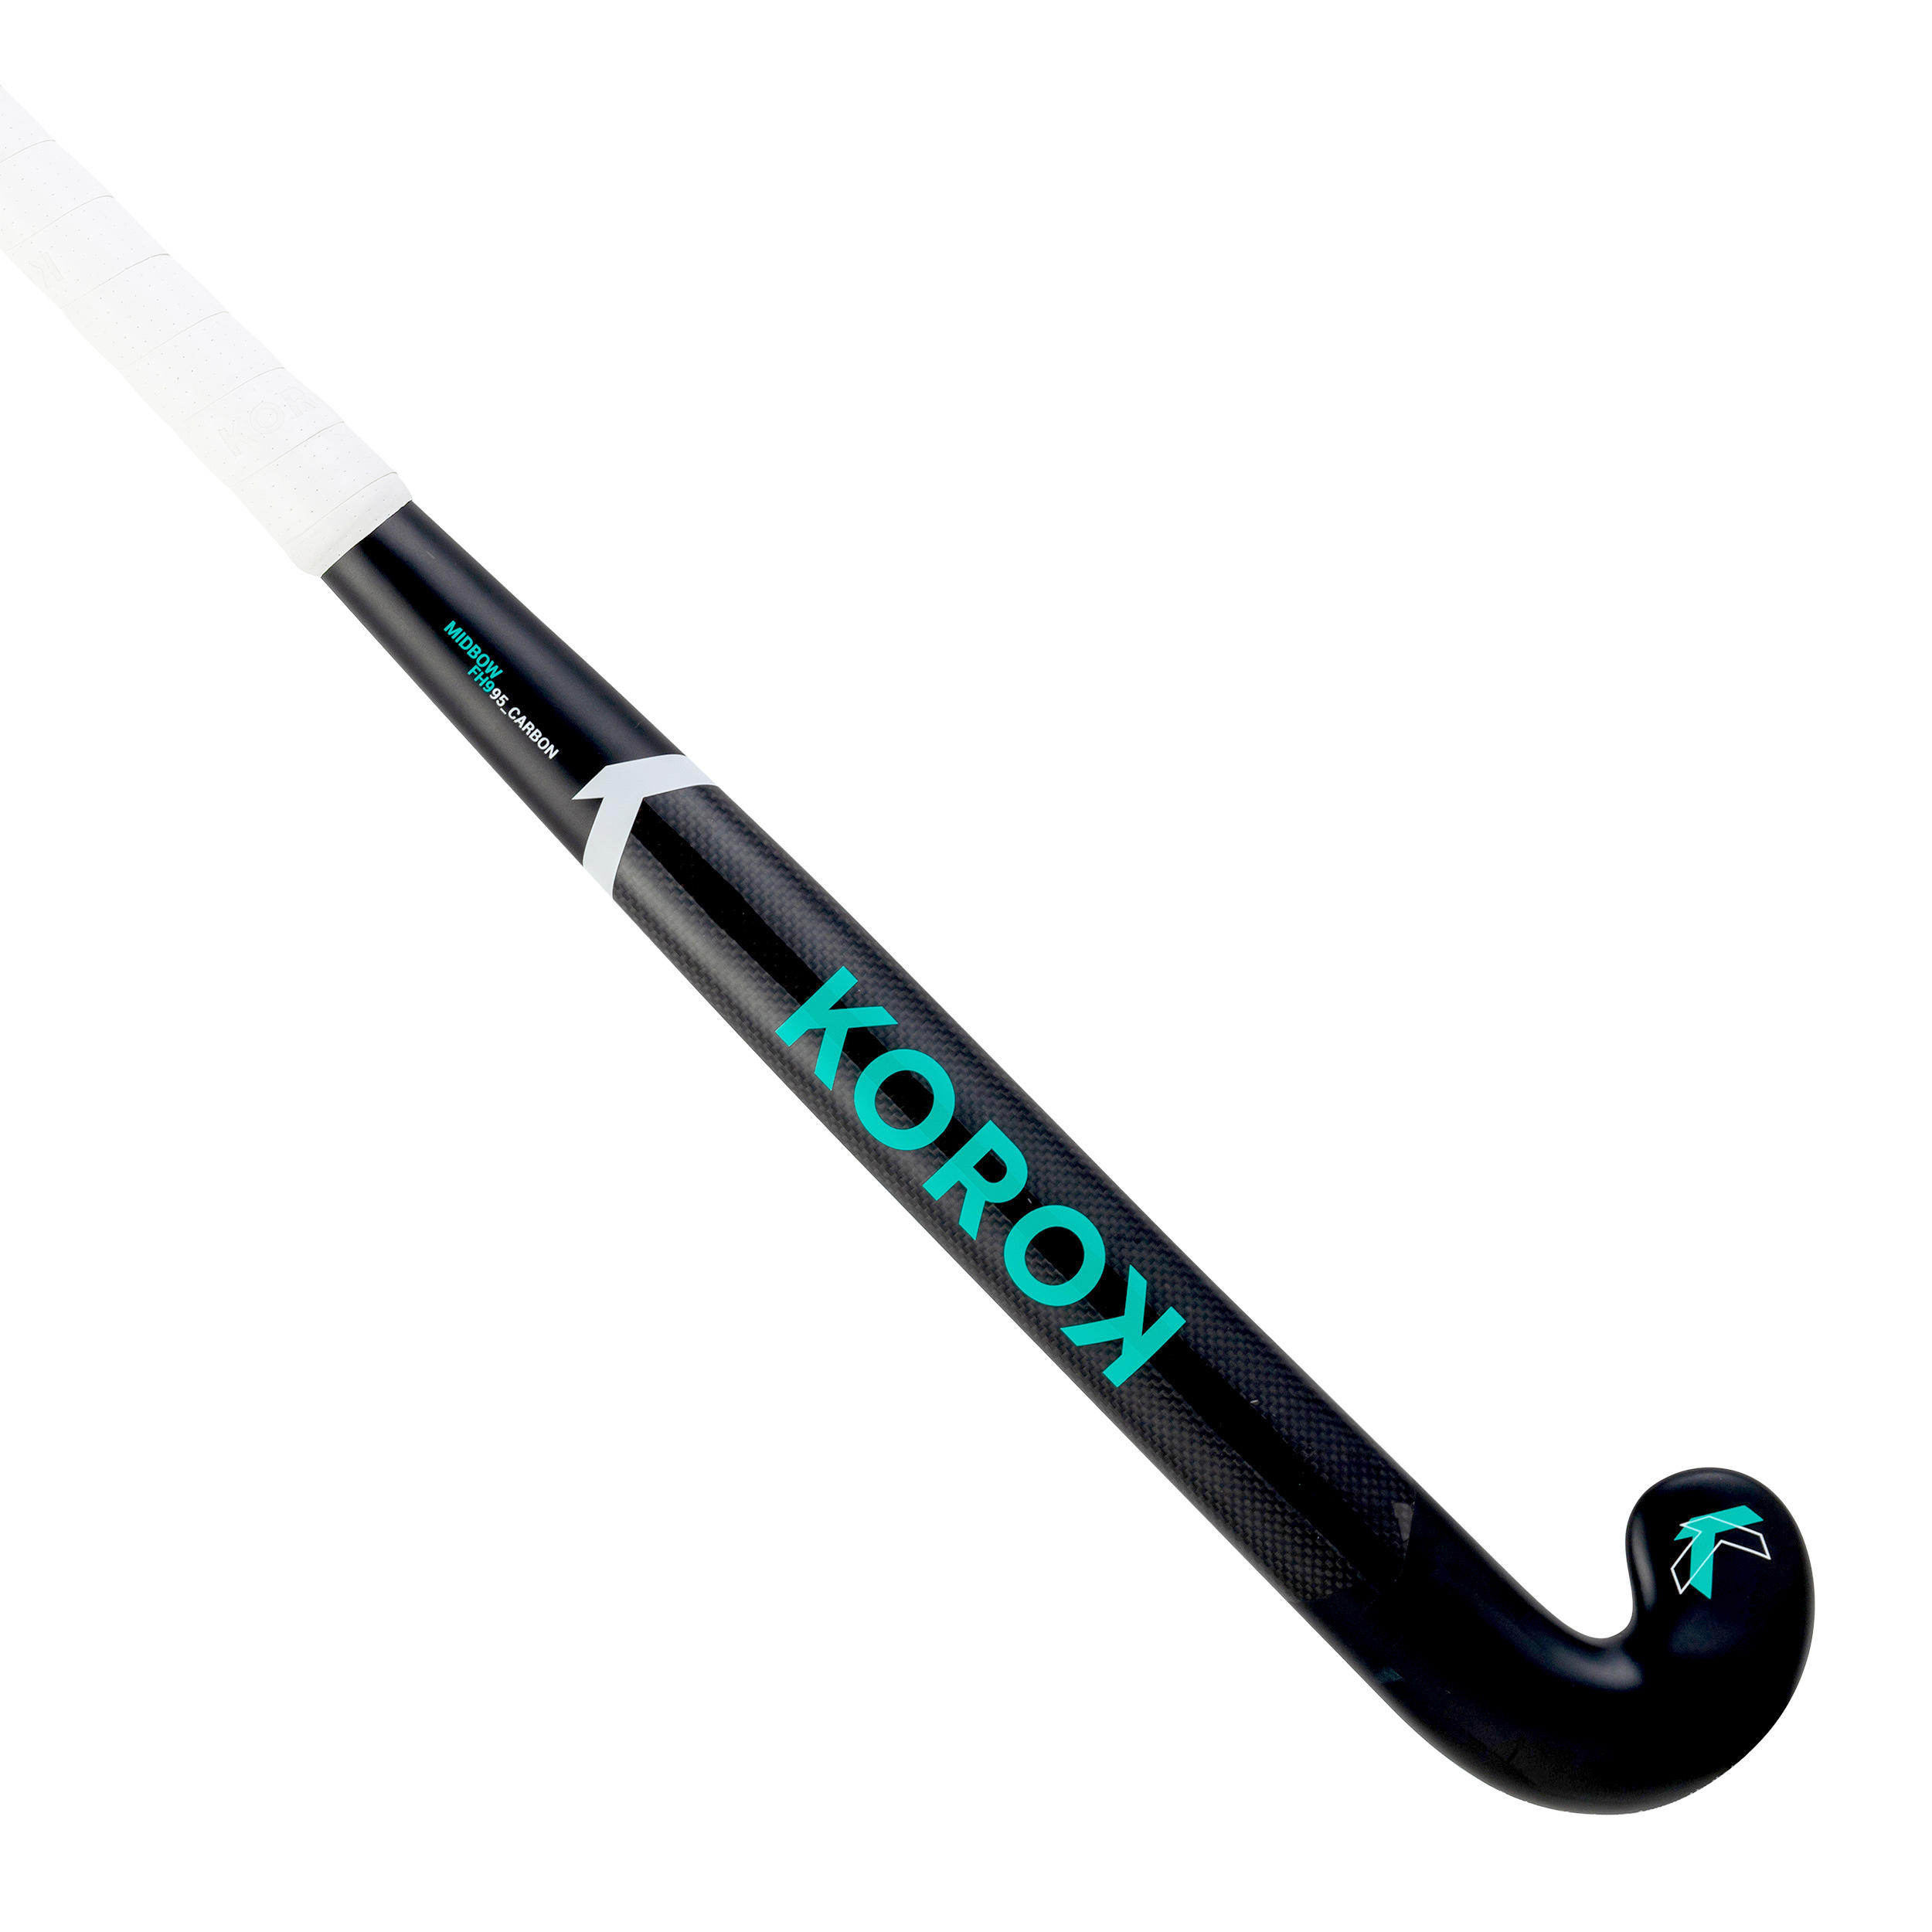 KOROK Adult Advanced Field Hockey 95% Carbon Mid Bow Stick FH995 - Black/Turquoise